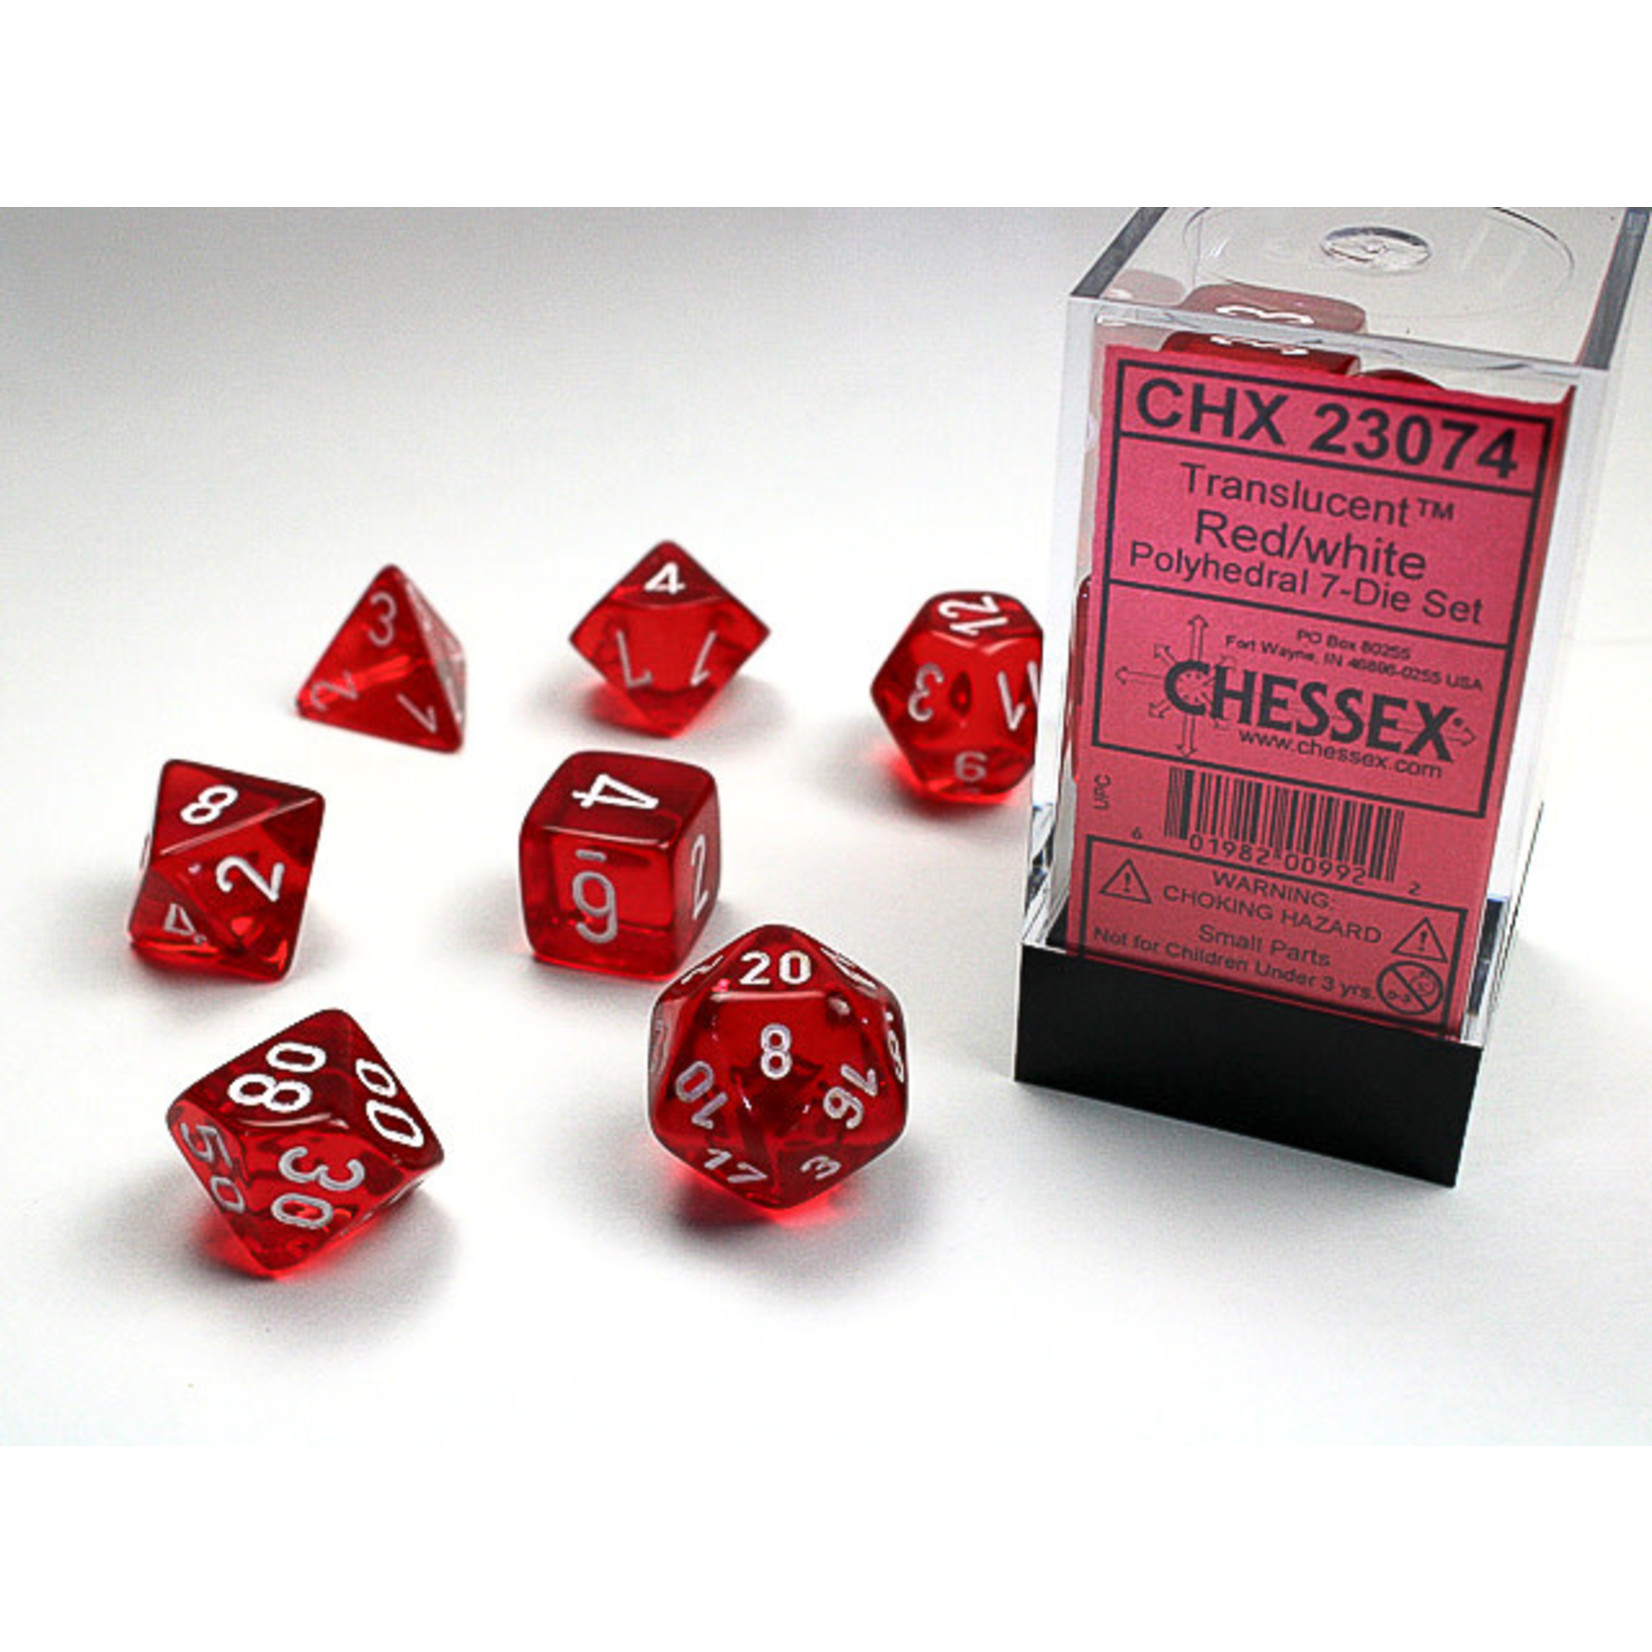 Chessex Dice RPG 23074 7pc Translucent Red/White